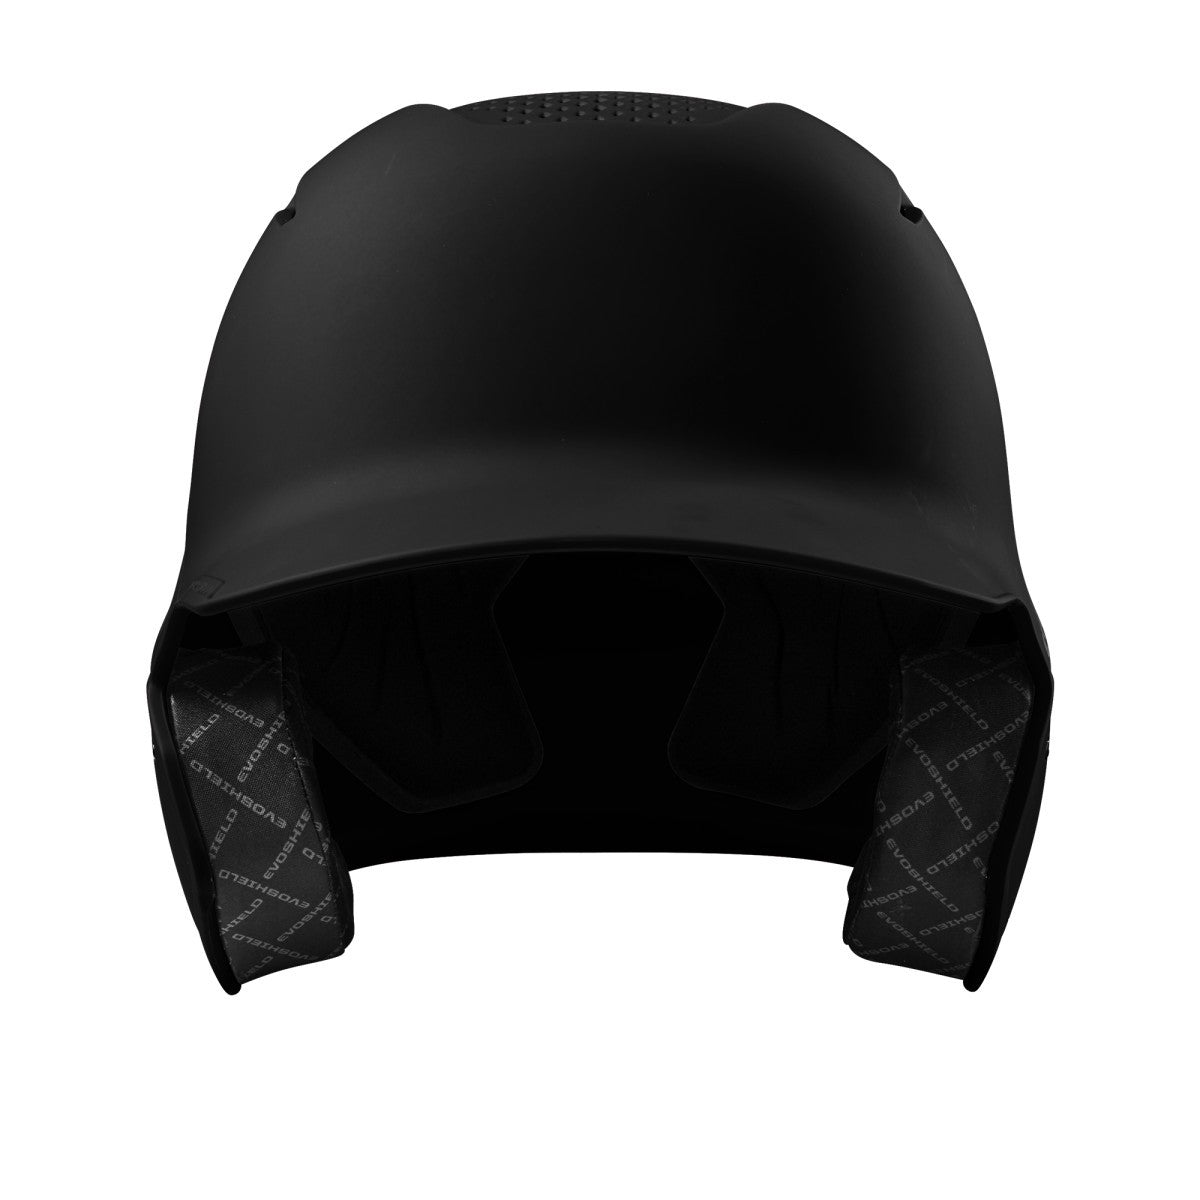 EvoShield XVT Batting Helmet - Red Matte Finish (WTV7115SC)